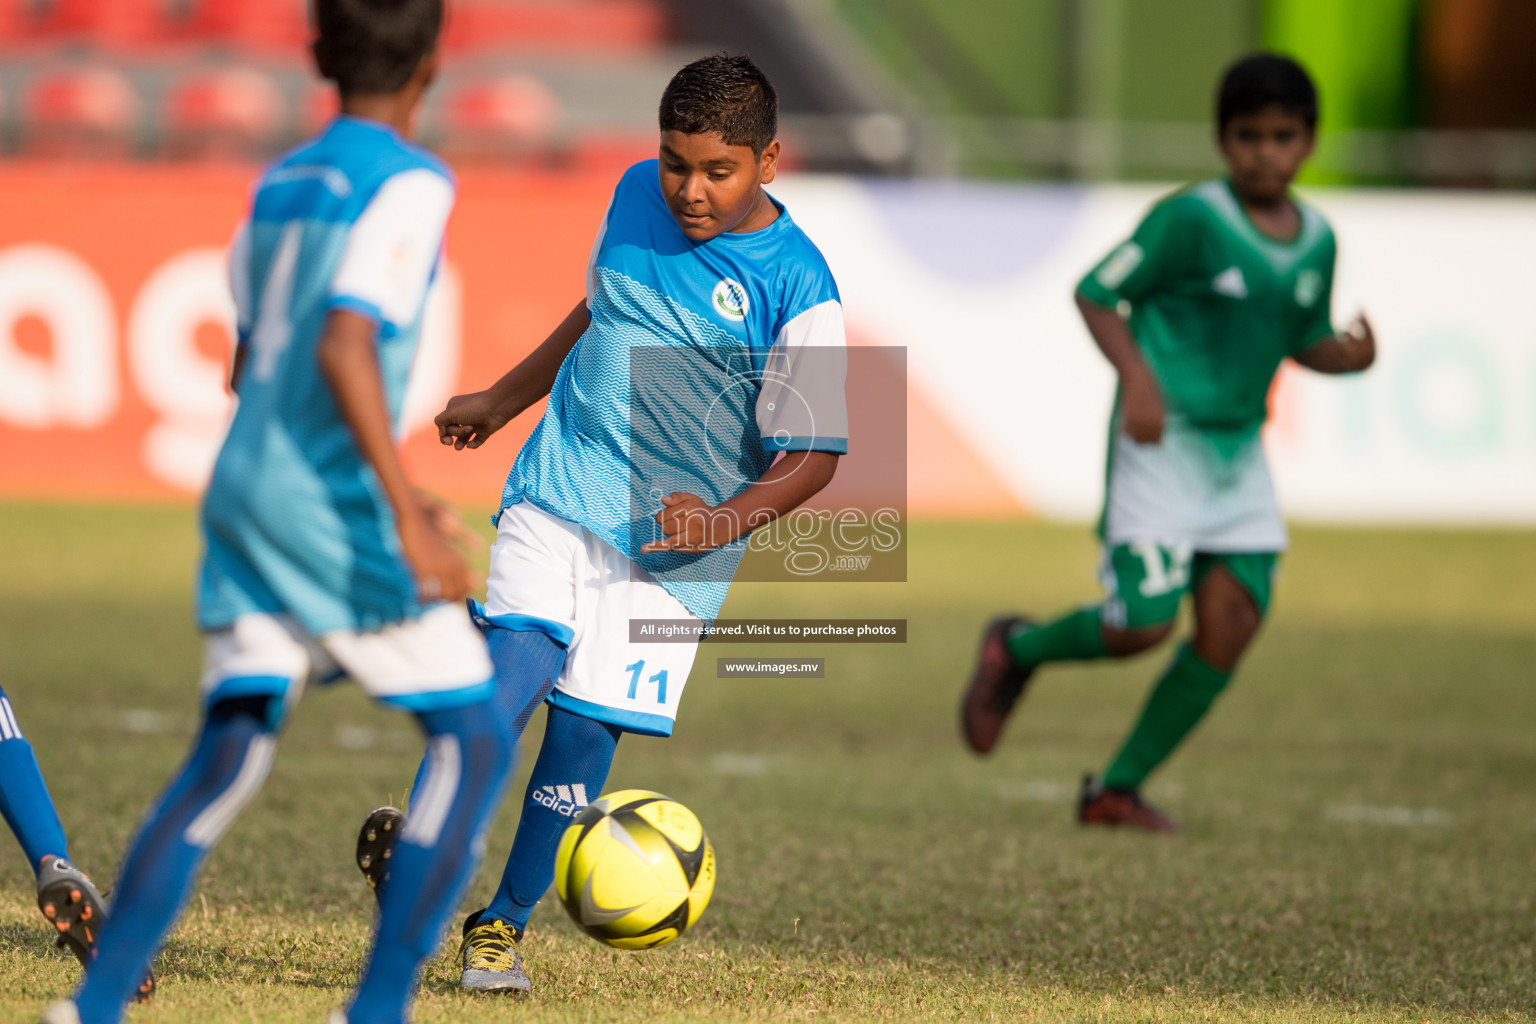 Aminiya School vs LH.EDU.CENTRE in MAMEN Inter School Football Tournament 2019 (U13) in Male, Maldives on 30th March 2019, Photos: Hassan Simah / images.mv